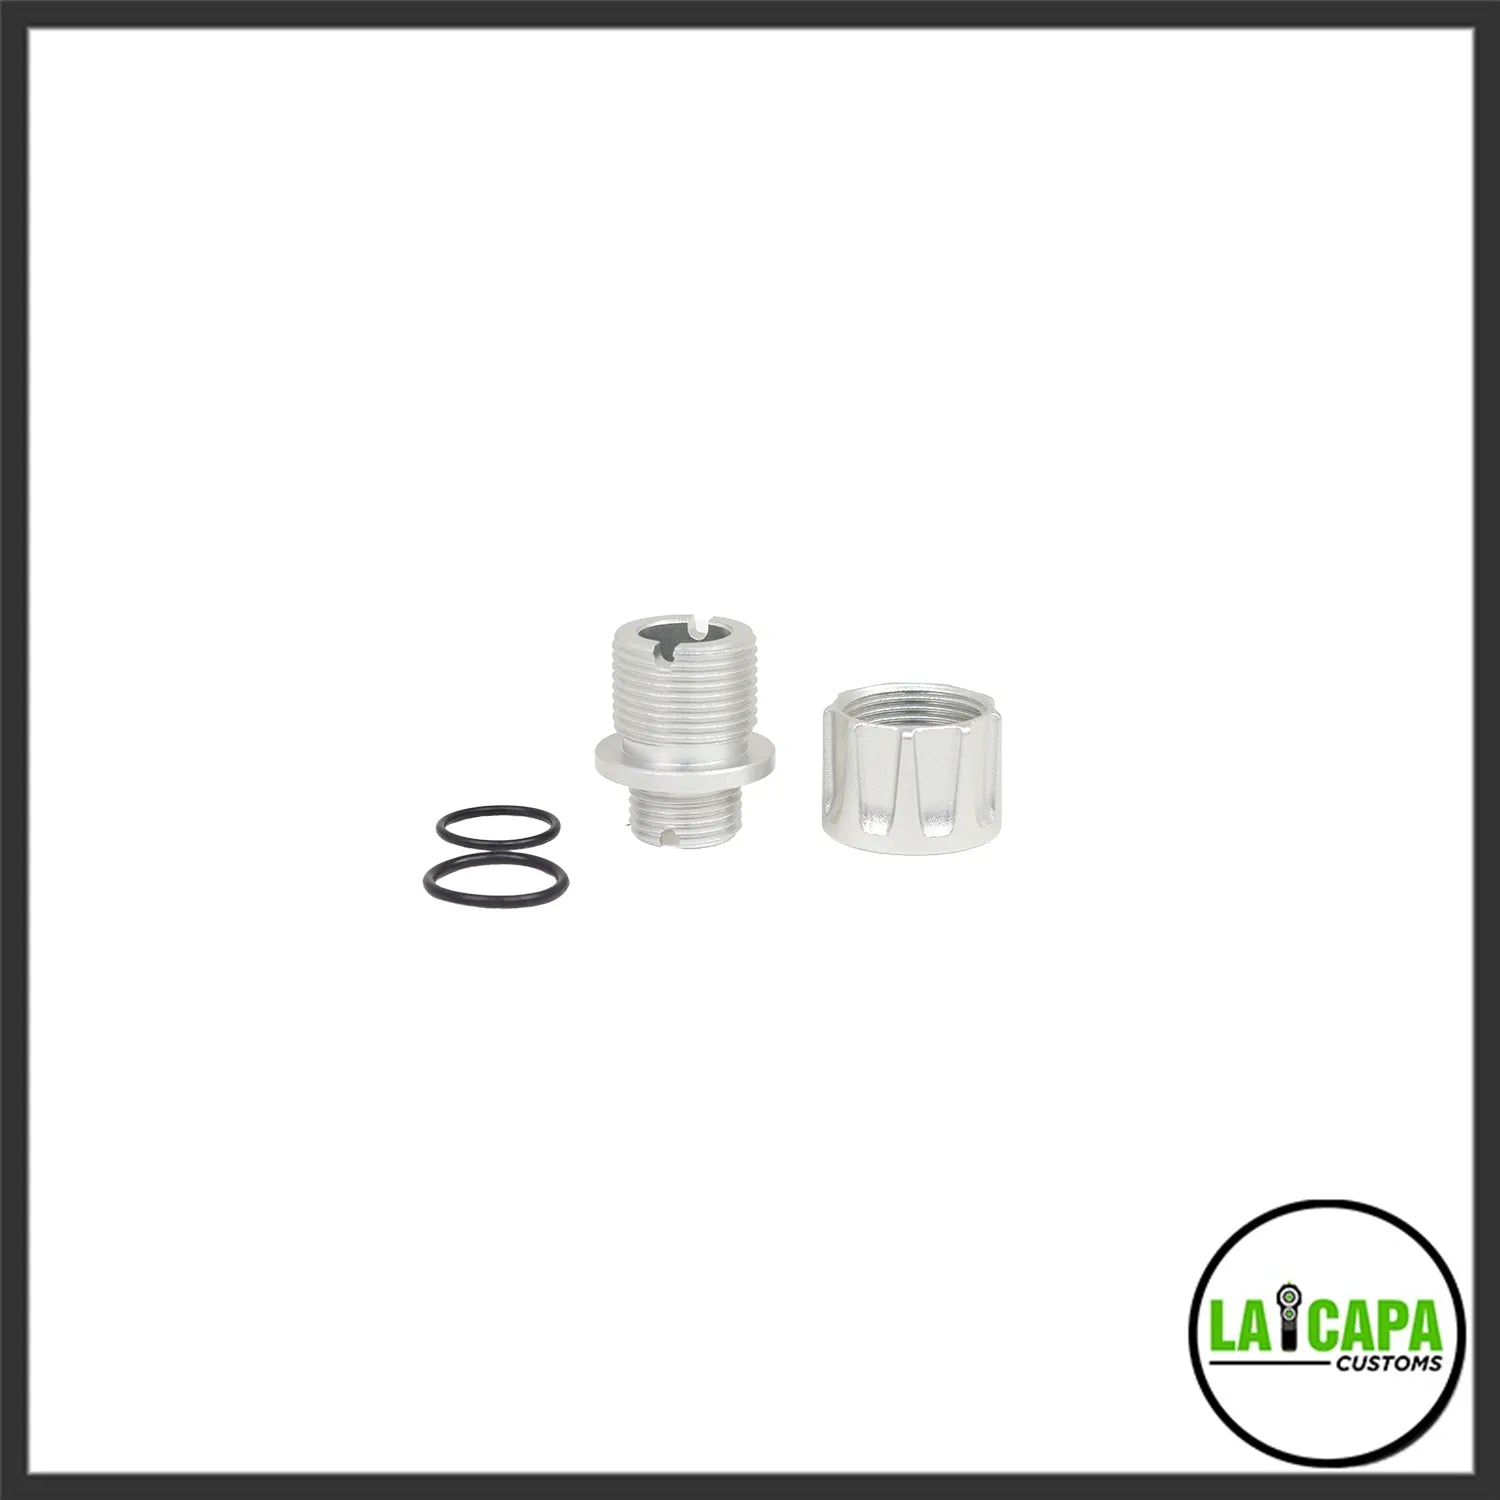 LA Capa Customs “S1” Reversible Thread Adapter for Hi Capa - Silver